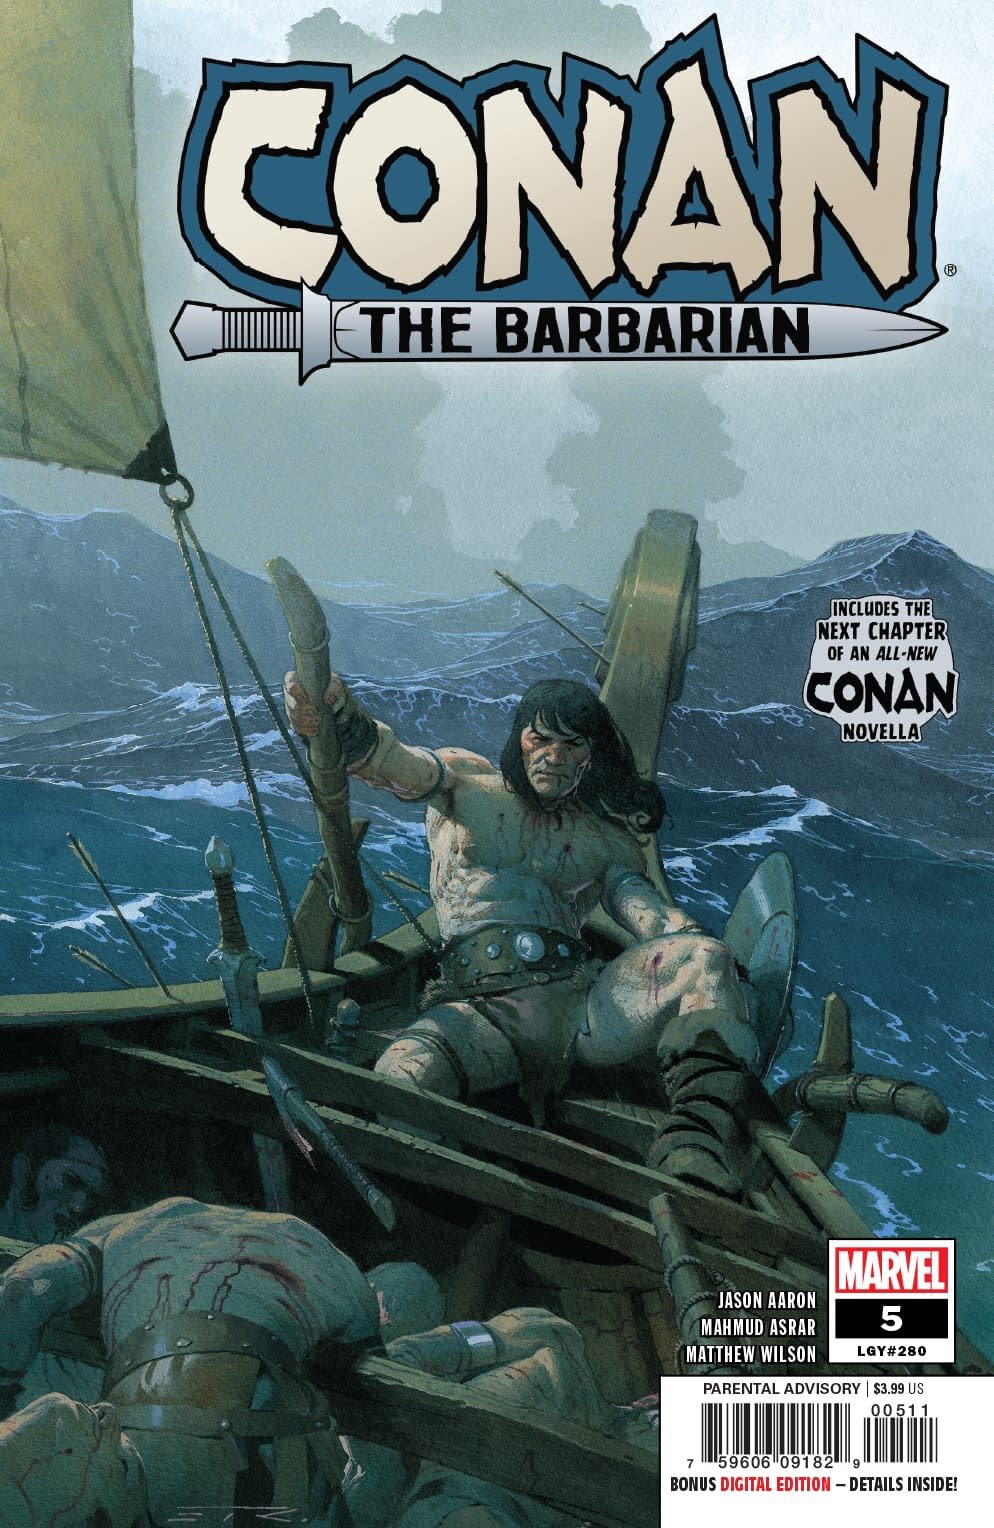 Bad Hyperborean Yelp Reviews in Next Week's Conan the Barbarian #5